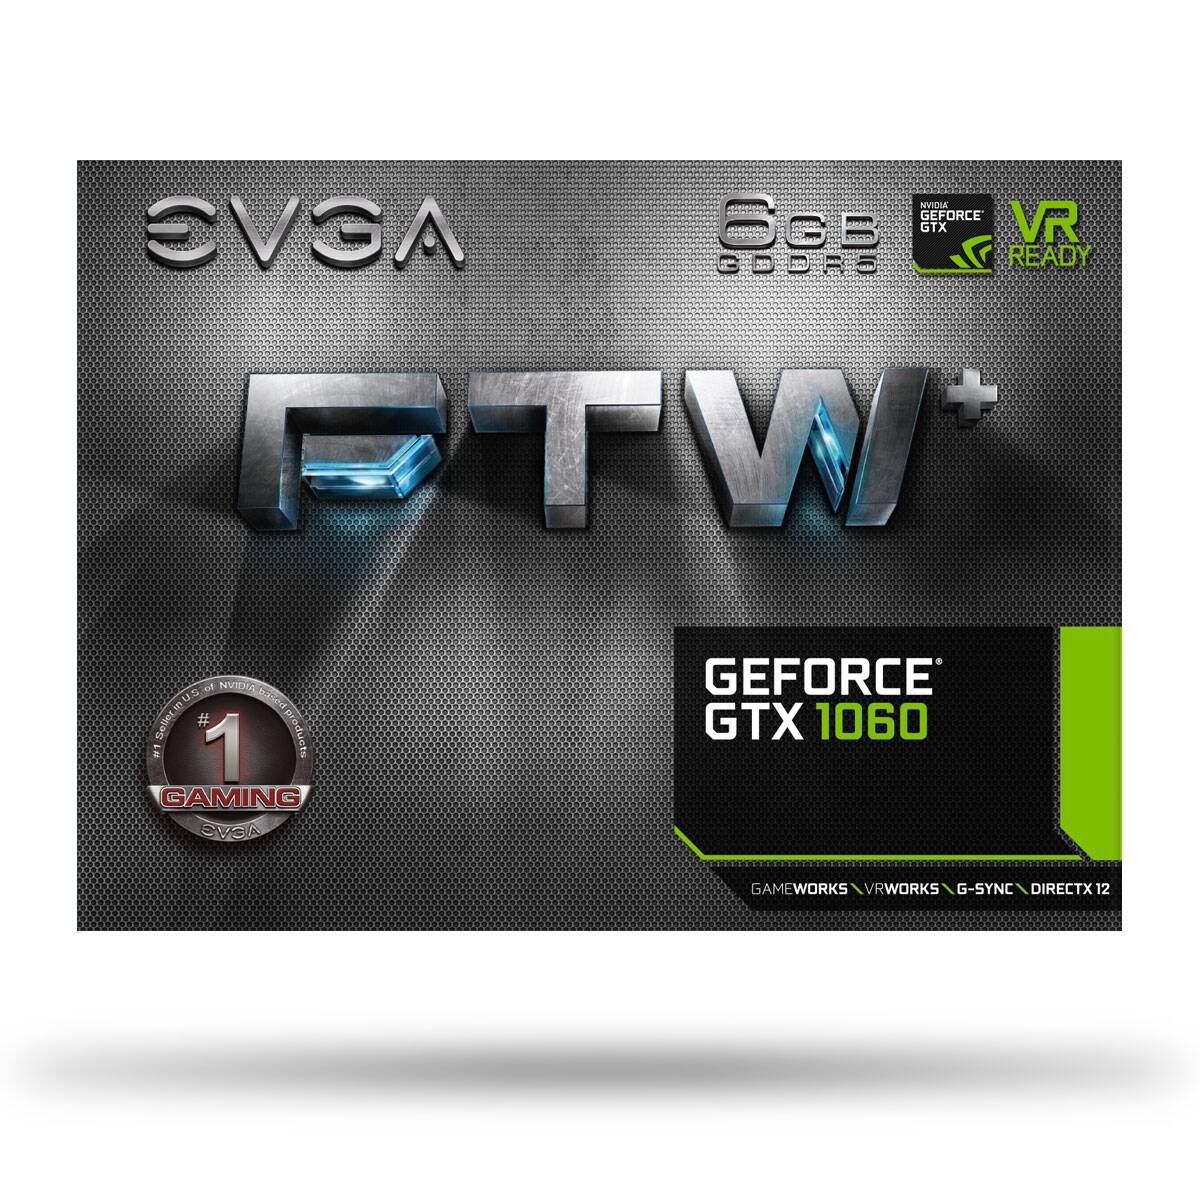 EVGA - Articles - EVGA GeForce GTX 1060